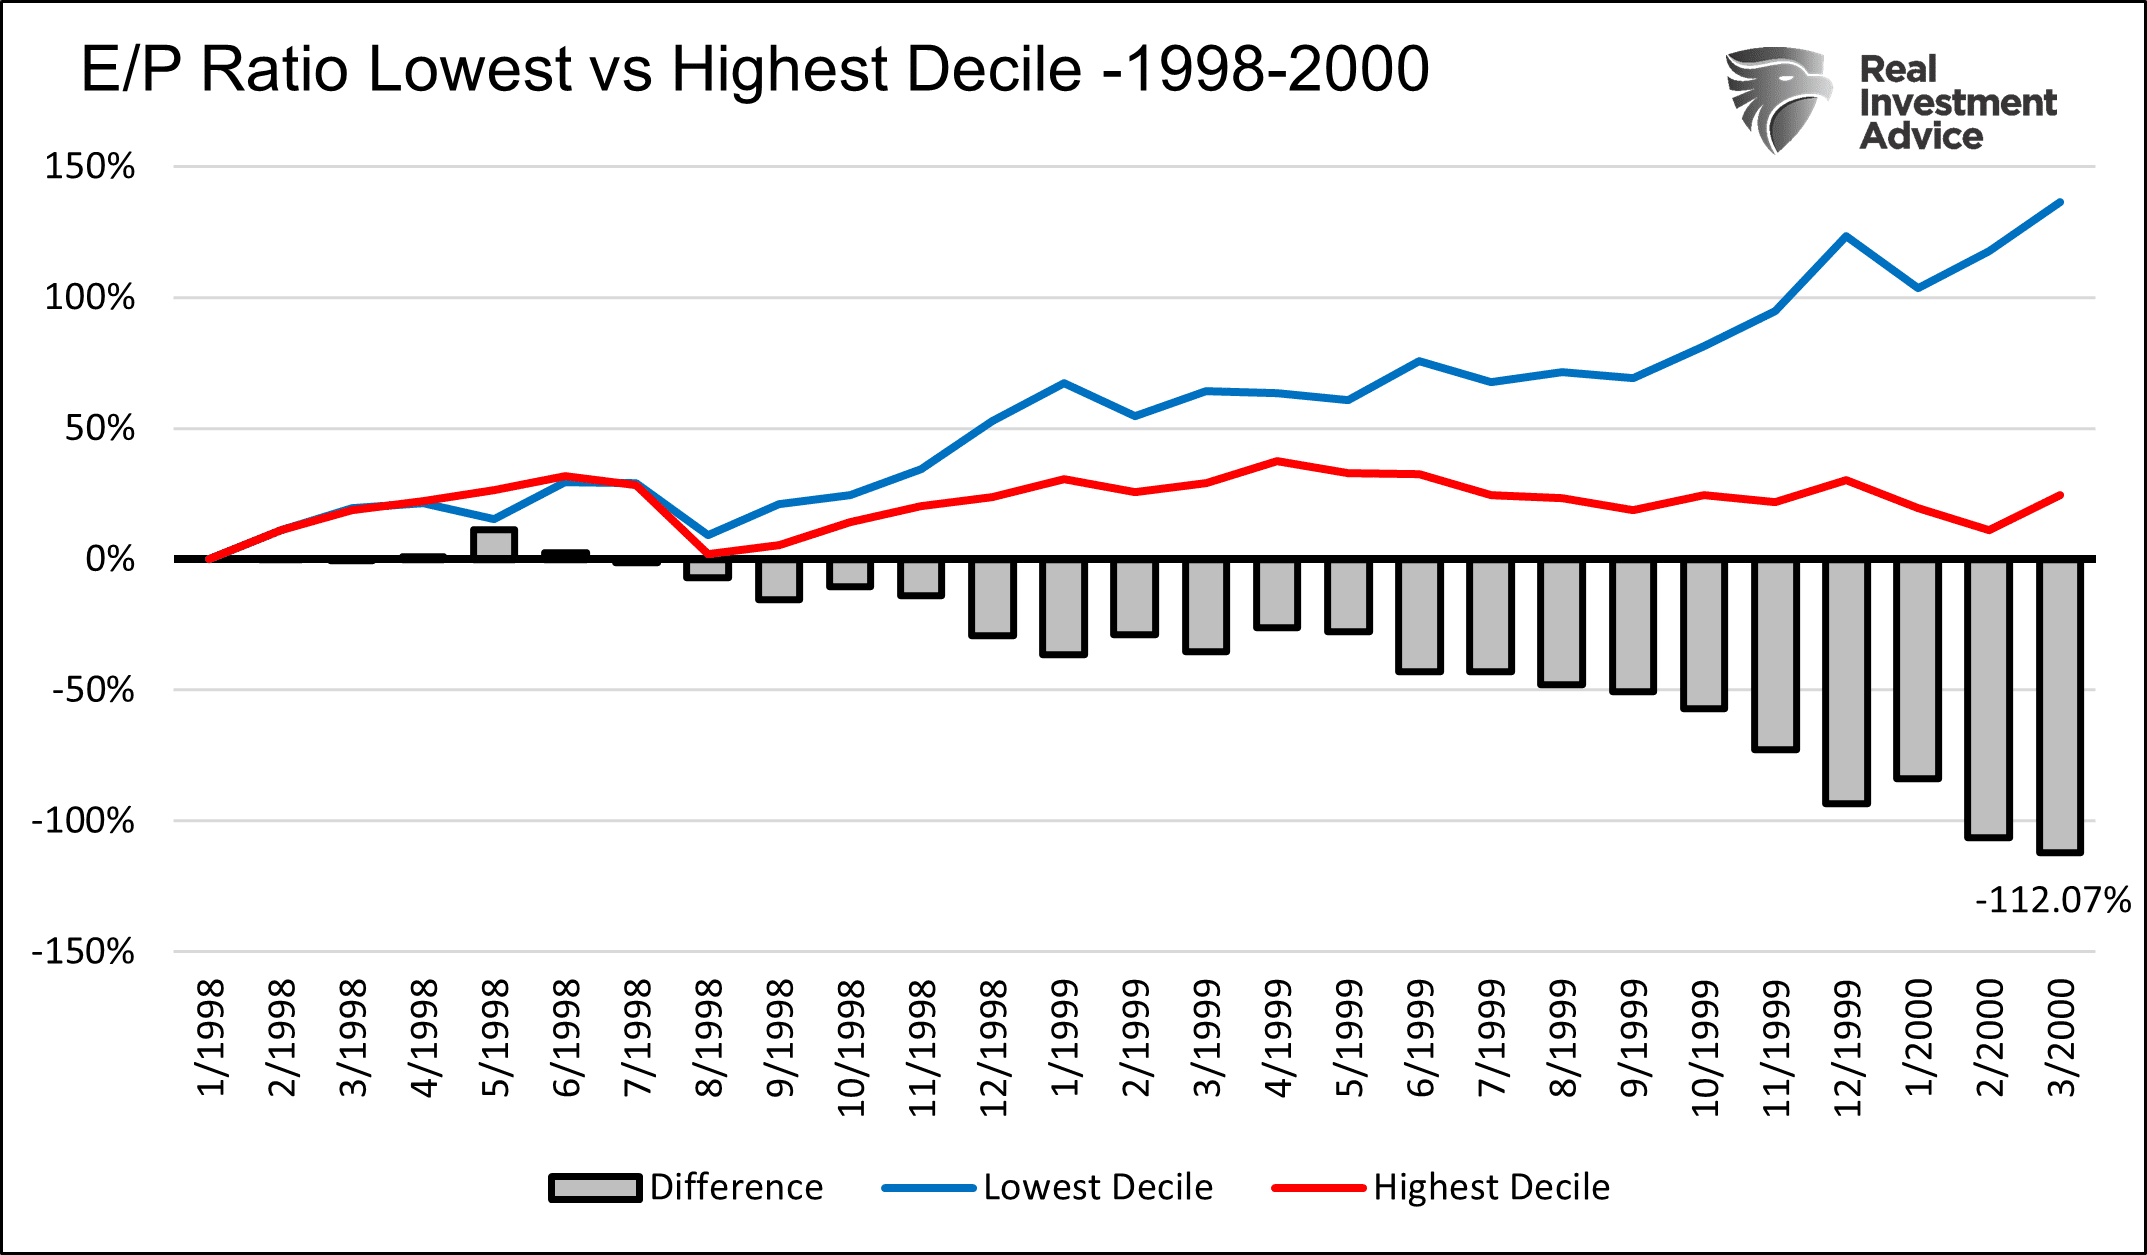 E/P Ratio Lowest vs Highest 1998-2000